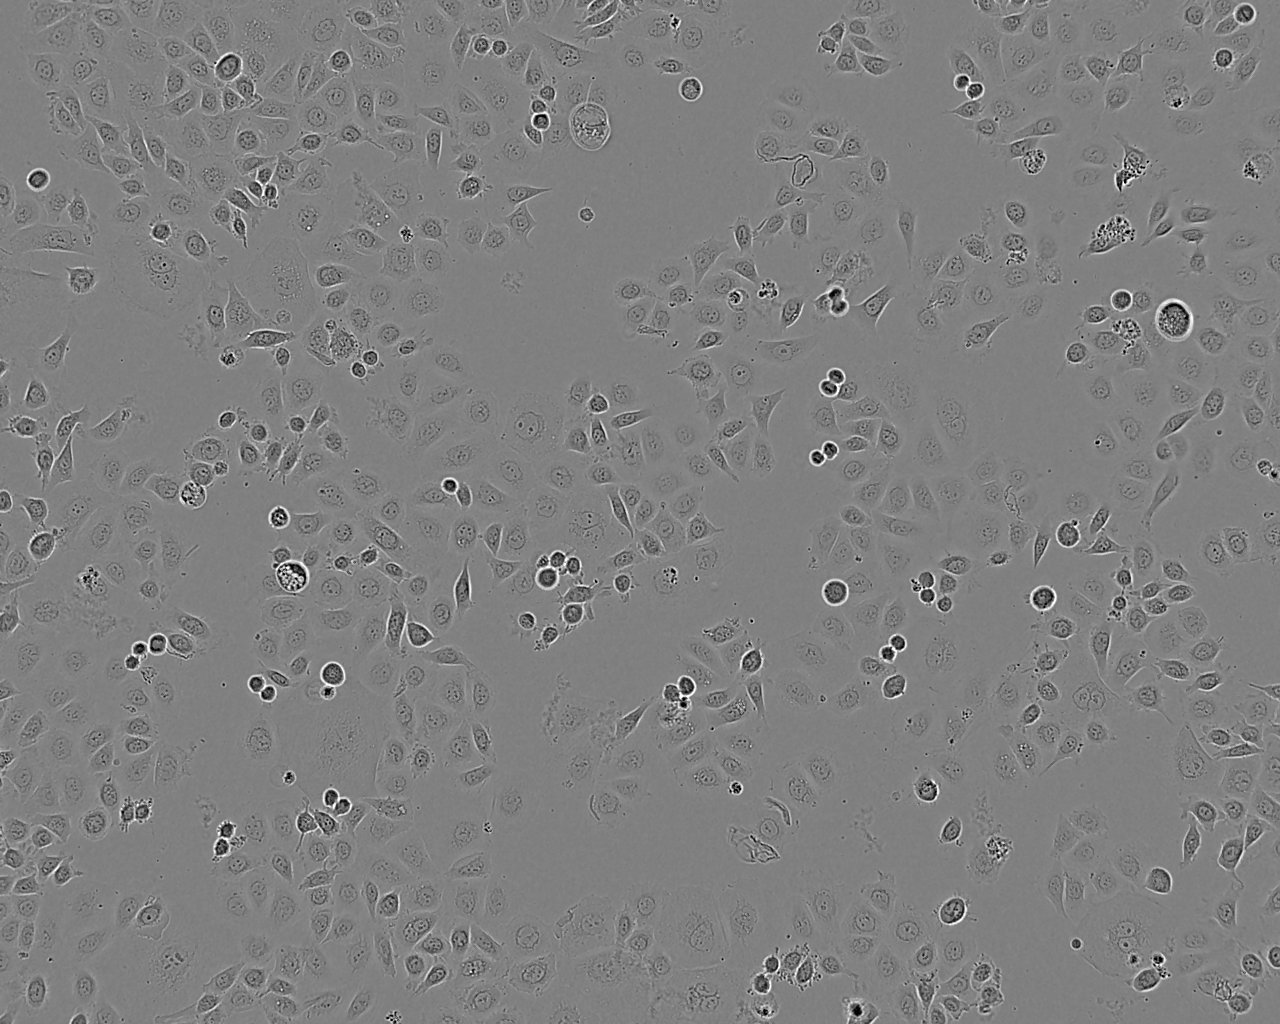 FRhK-4细胞：恒河猴胚肾细胞系,FRhK-4